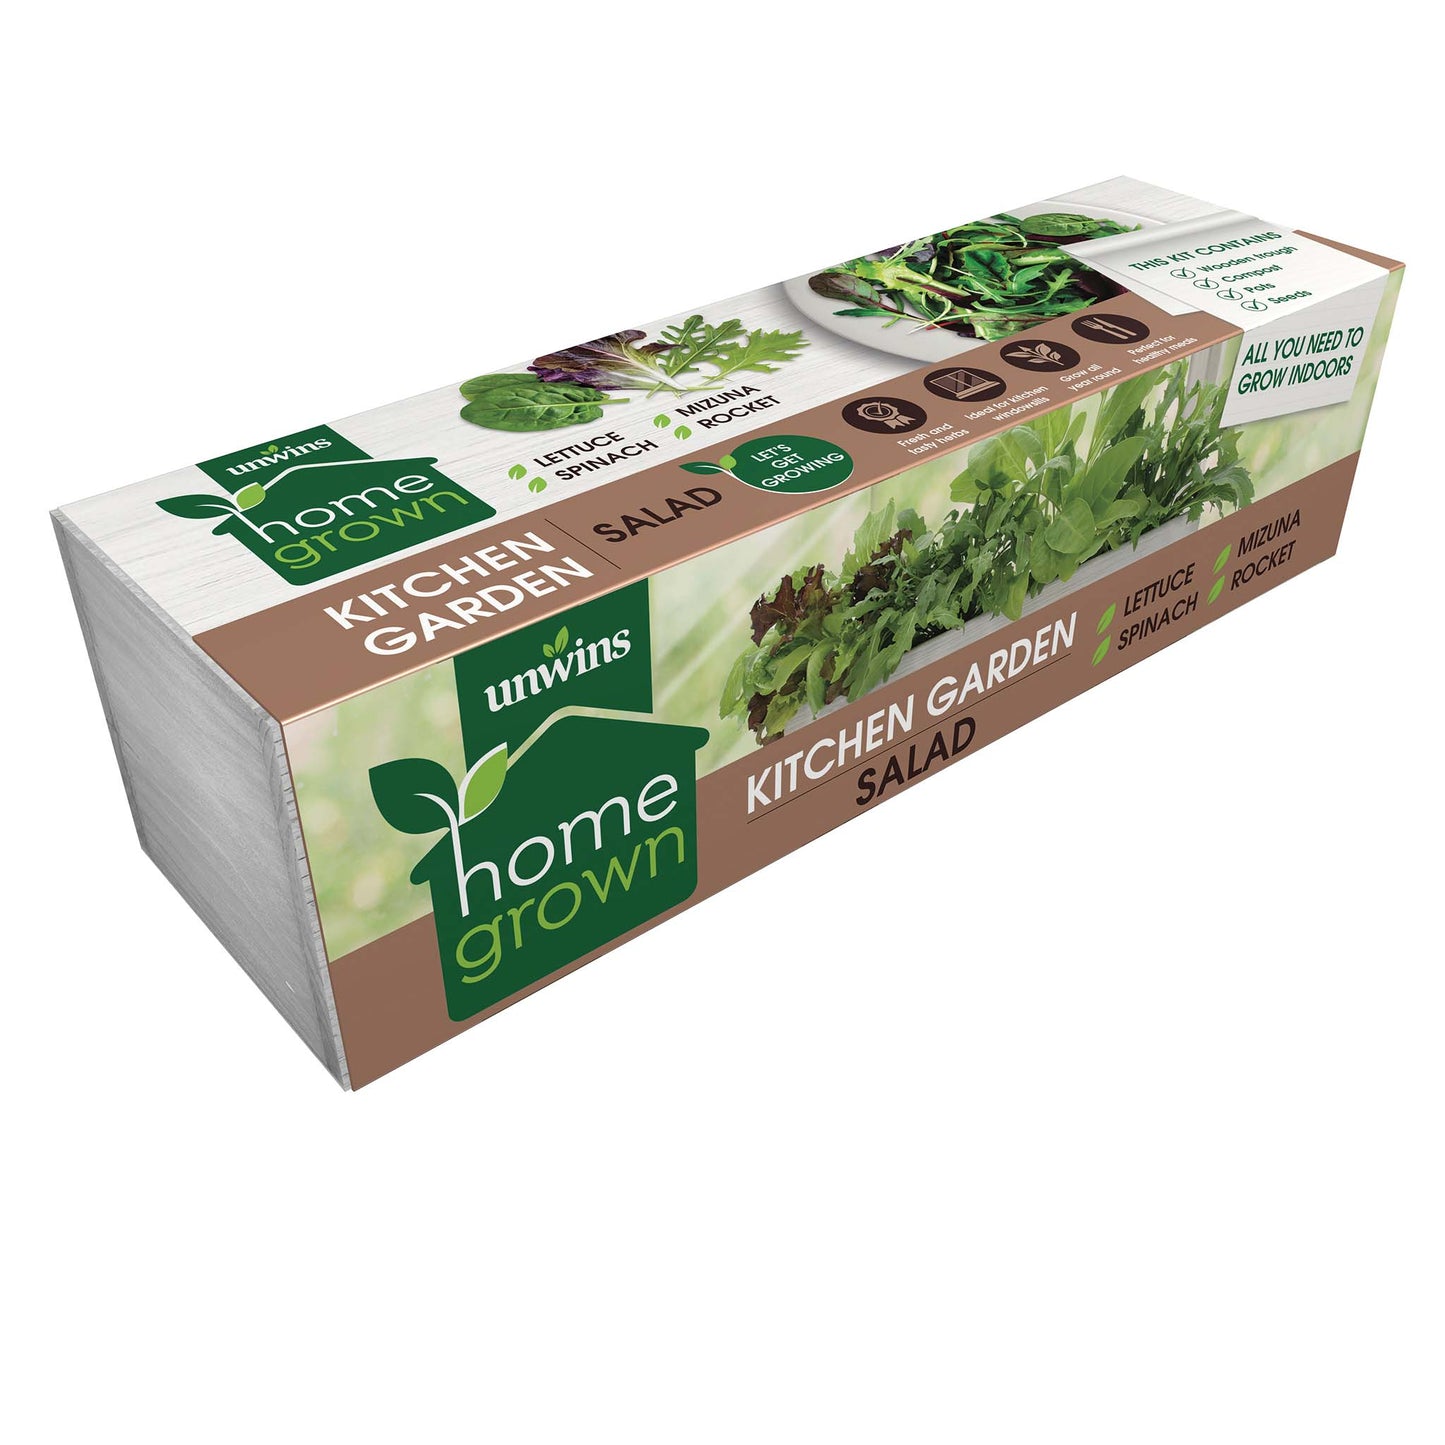 Unwins Homegrown Salad Kitchen Garden Kit Front of Pack